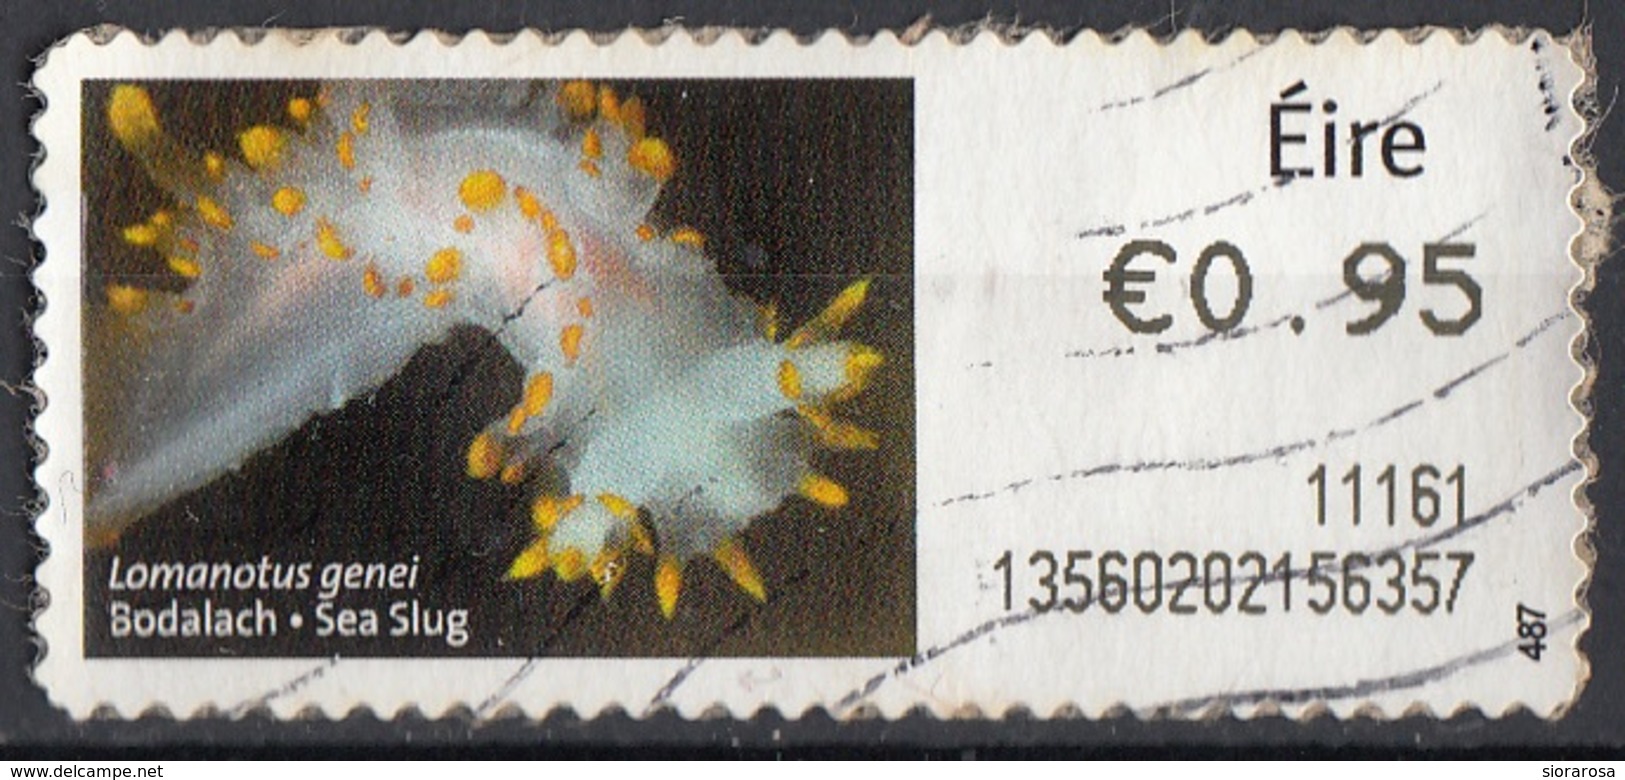 Irlanda 2010  Label Post And Go - Sea Slug - Lomanotus Genei - Used Autoadesivo Ireland Eire - Usati